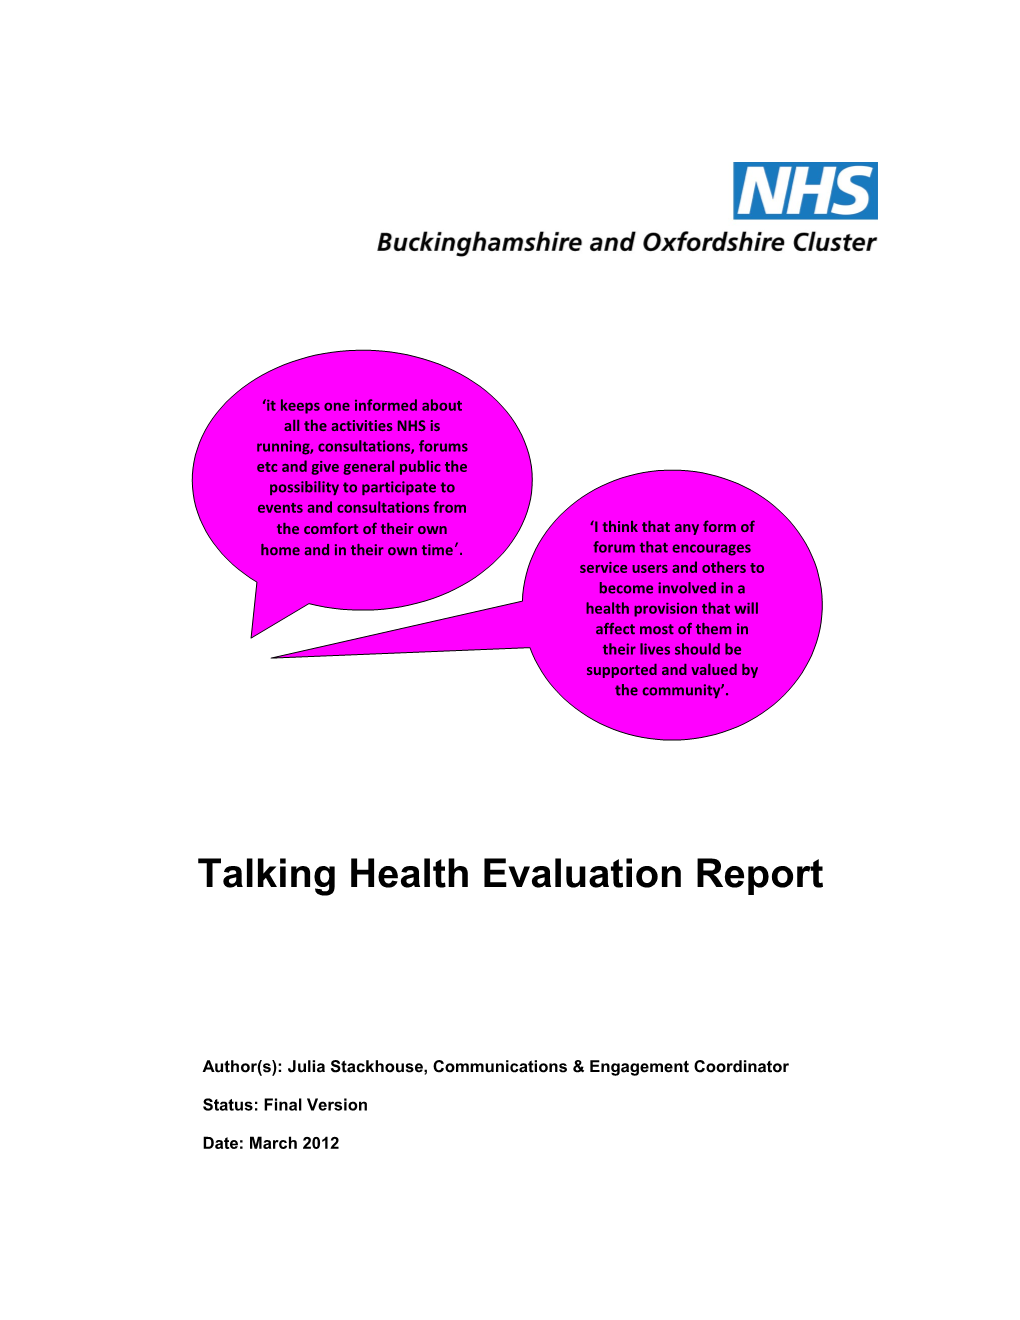 Talking Health Evaluation Report